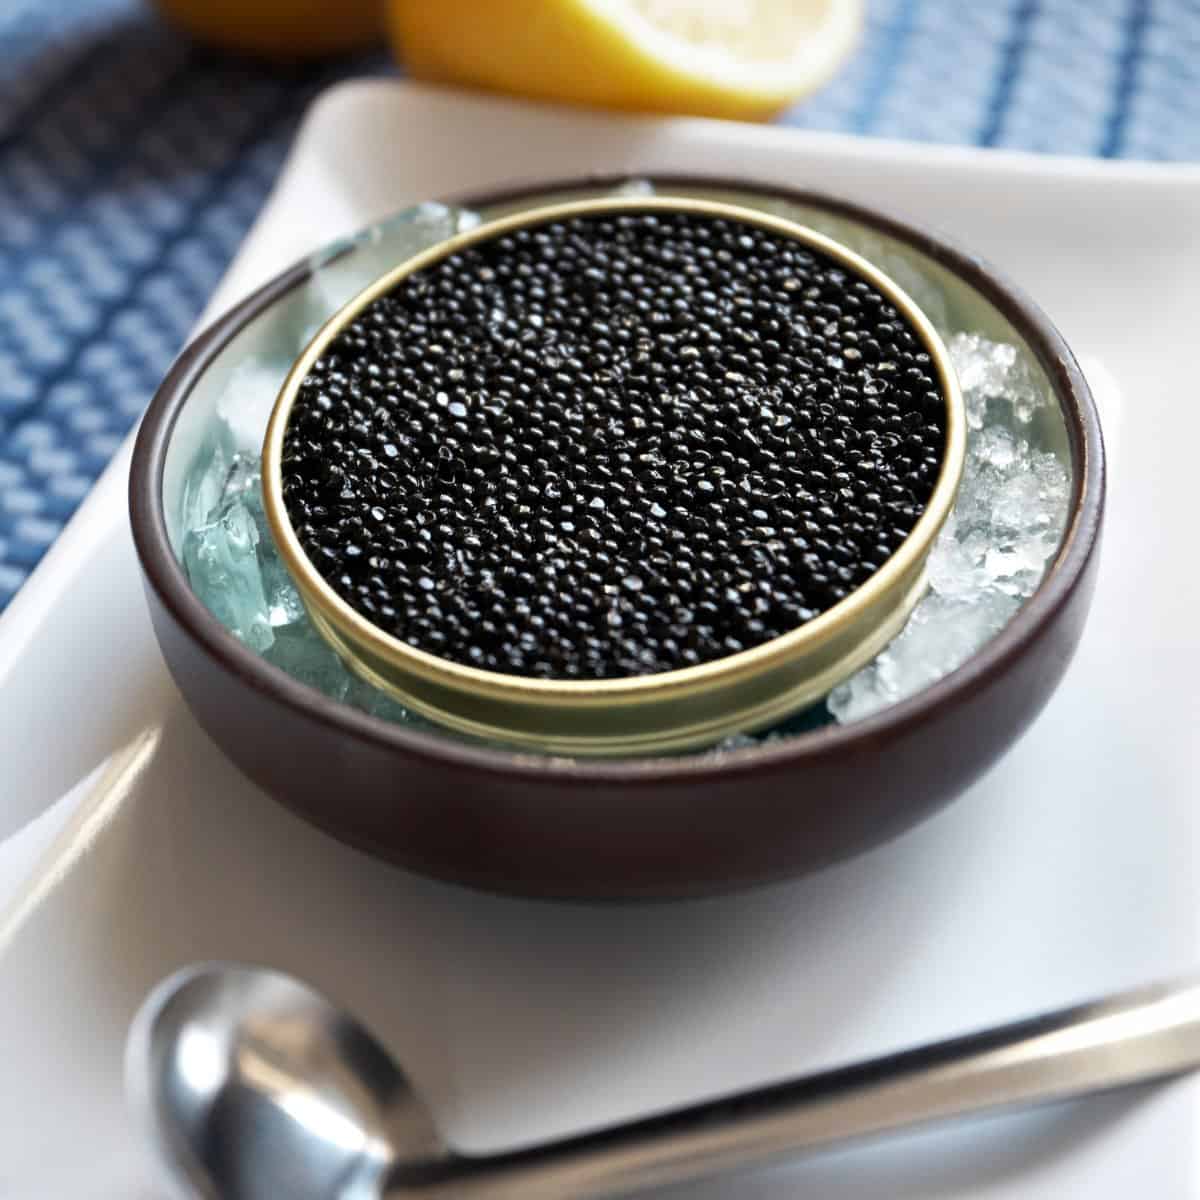 Caviar ke eng